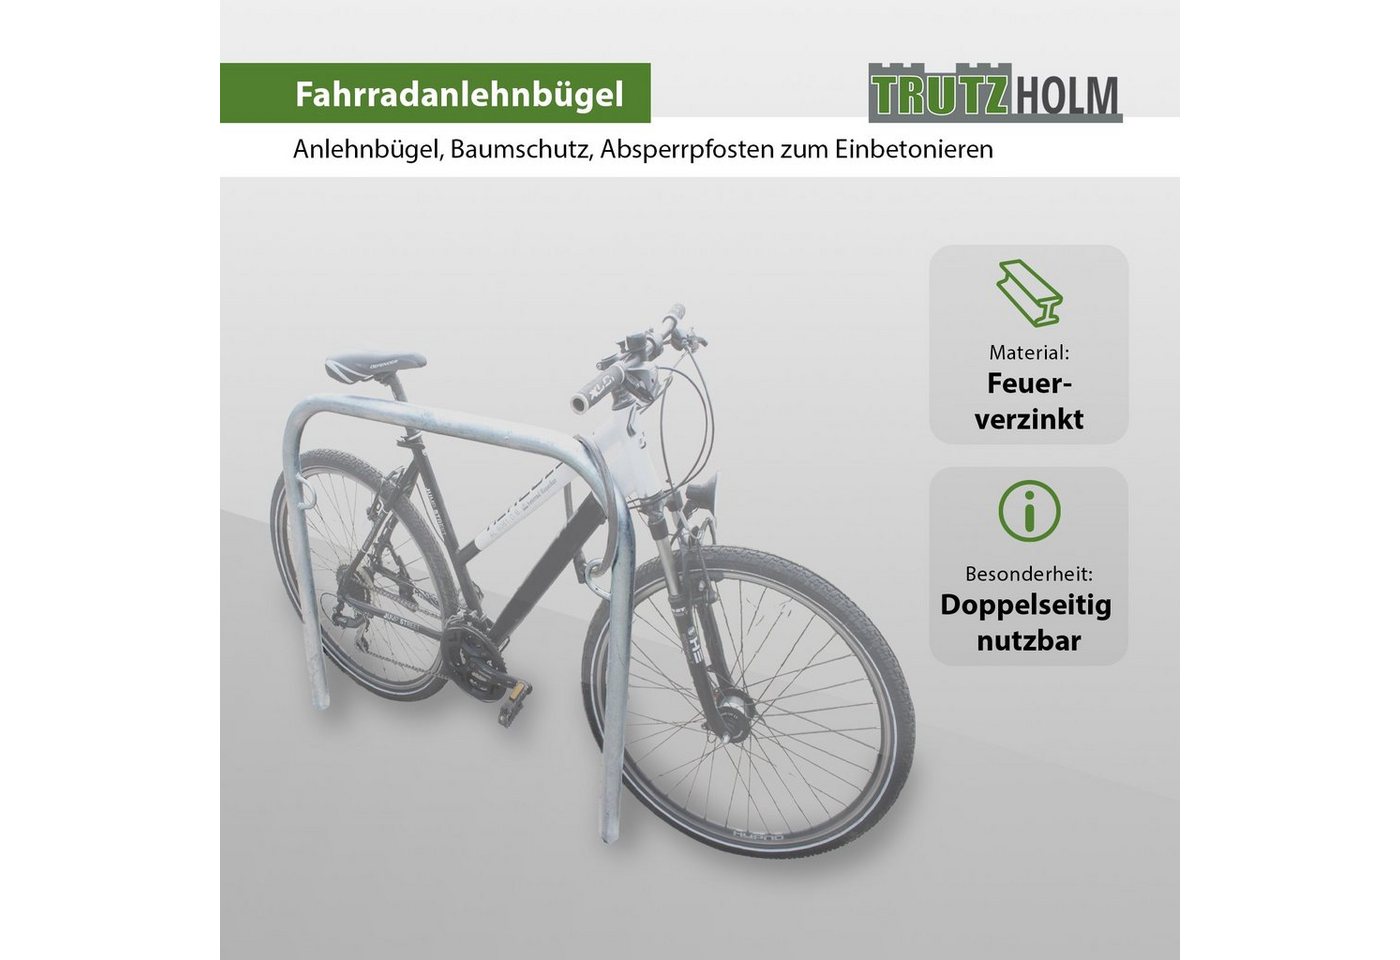 TRUTZHOLM Fahrradständer Fahrrad Anlehnbügel zum Einbetonieren 115x99cm Fahrradbügel feuerverzi von TRUTZHOLM